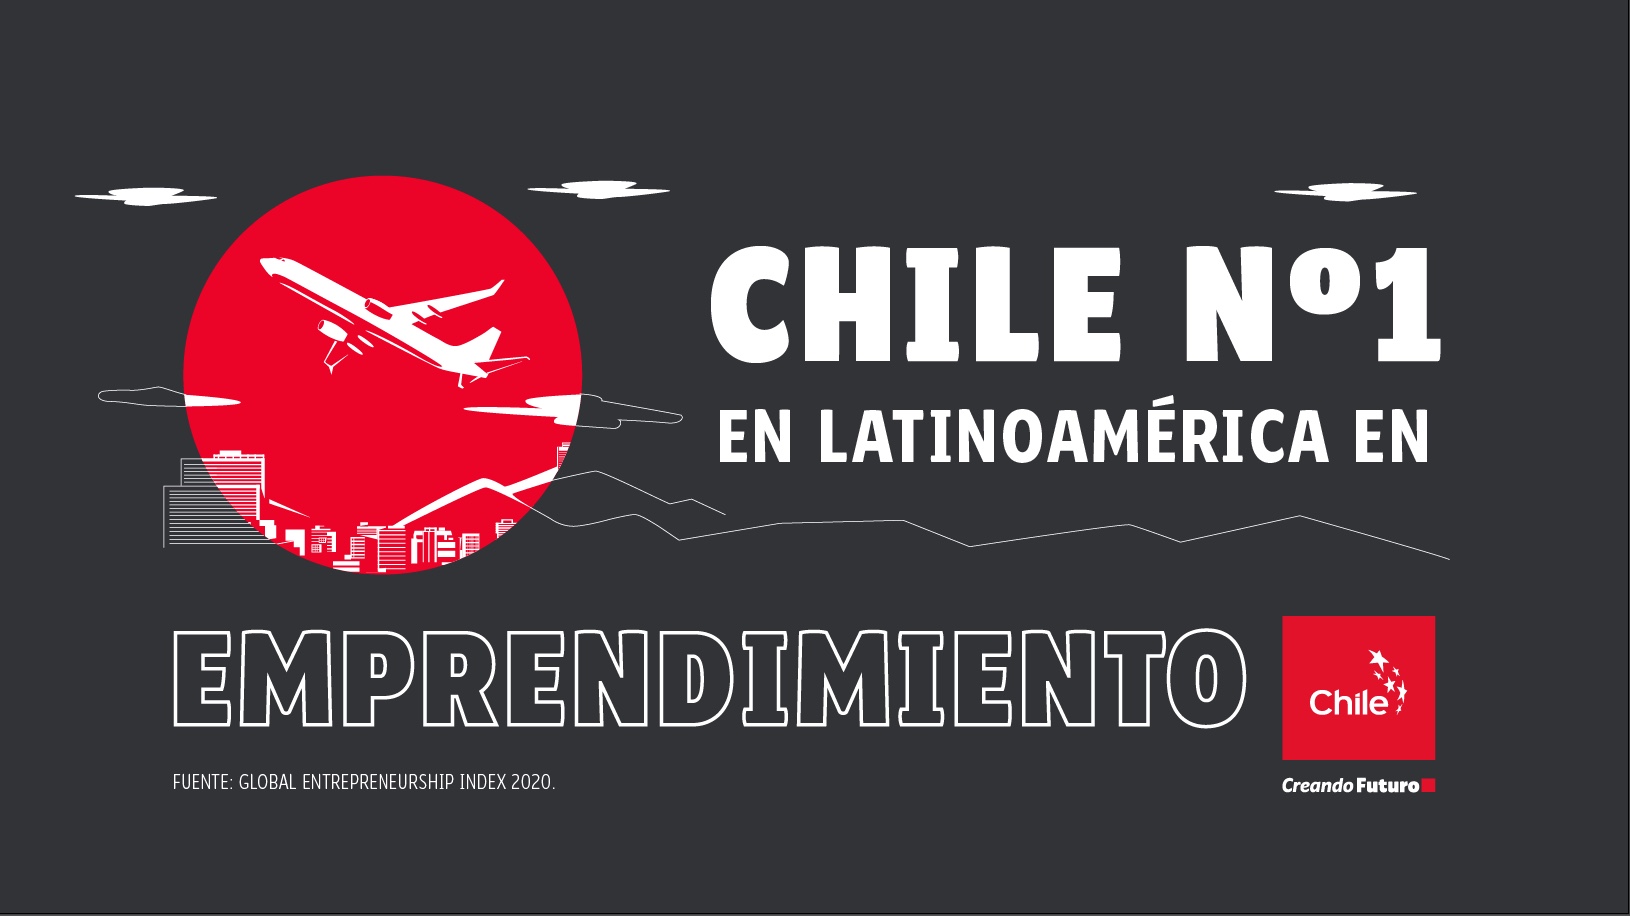 Emprendimiento / Entrepreneurship / Empreendimento | Marca Chile | Toolkit